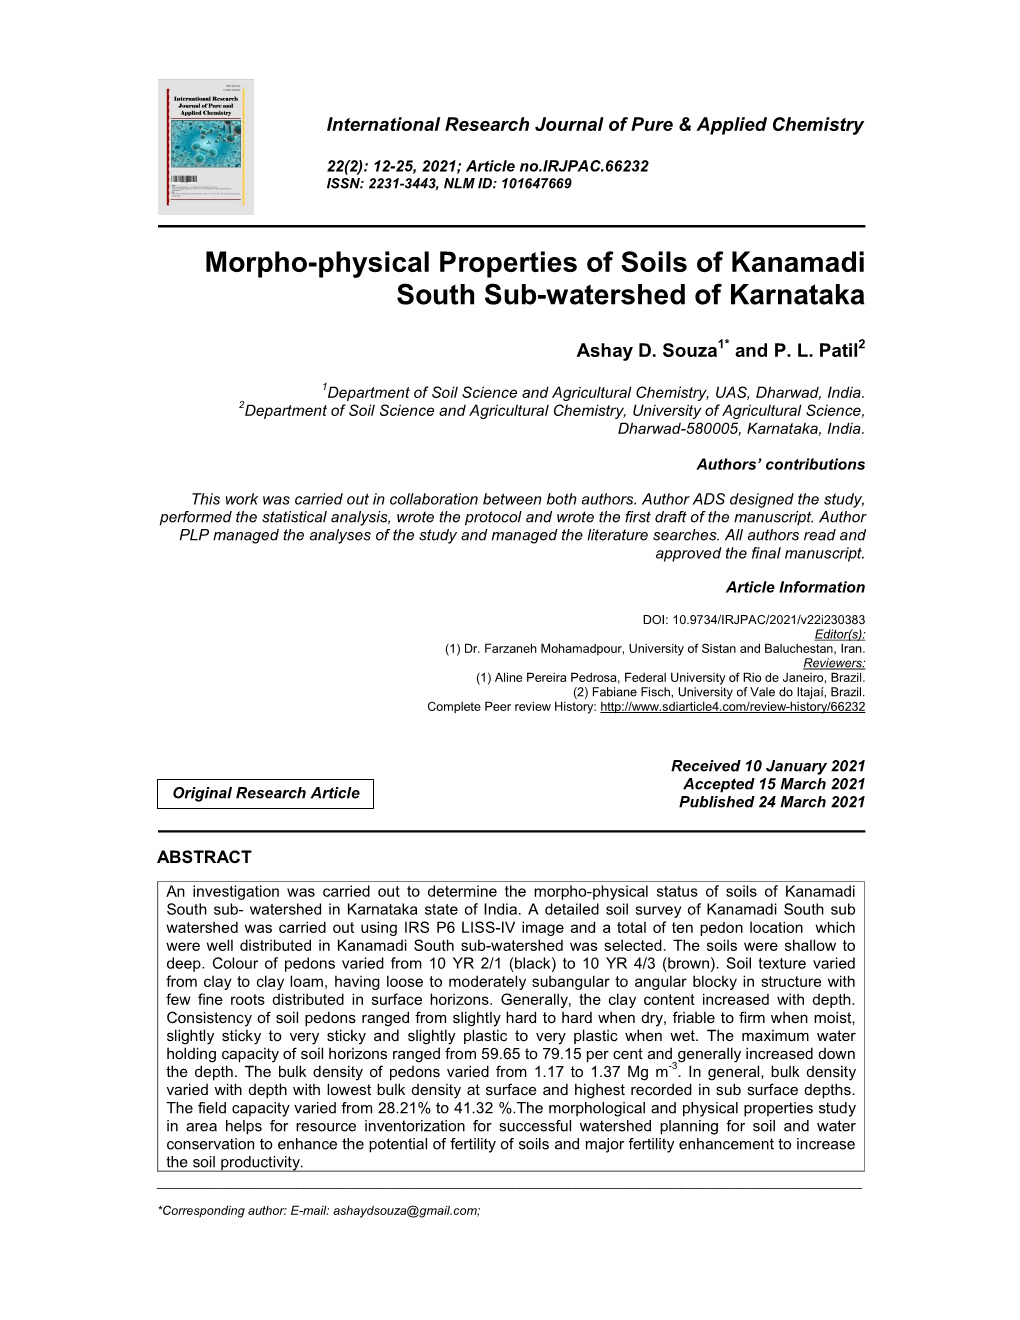 Morpho-Physical Properties of Soils of Kanamadi South Sub-Watershed of Karnataka